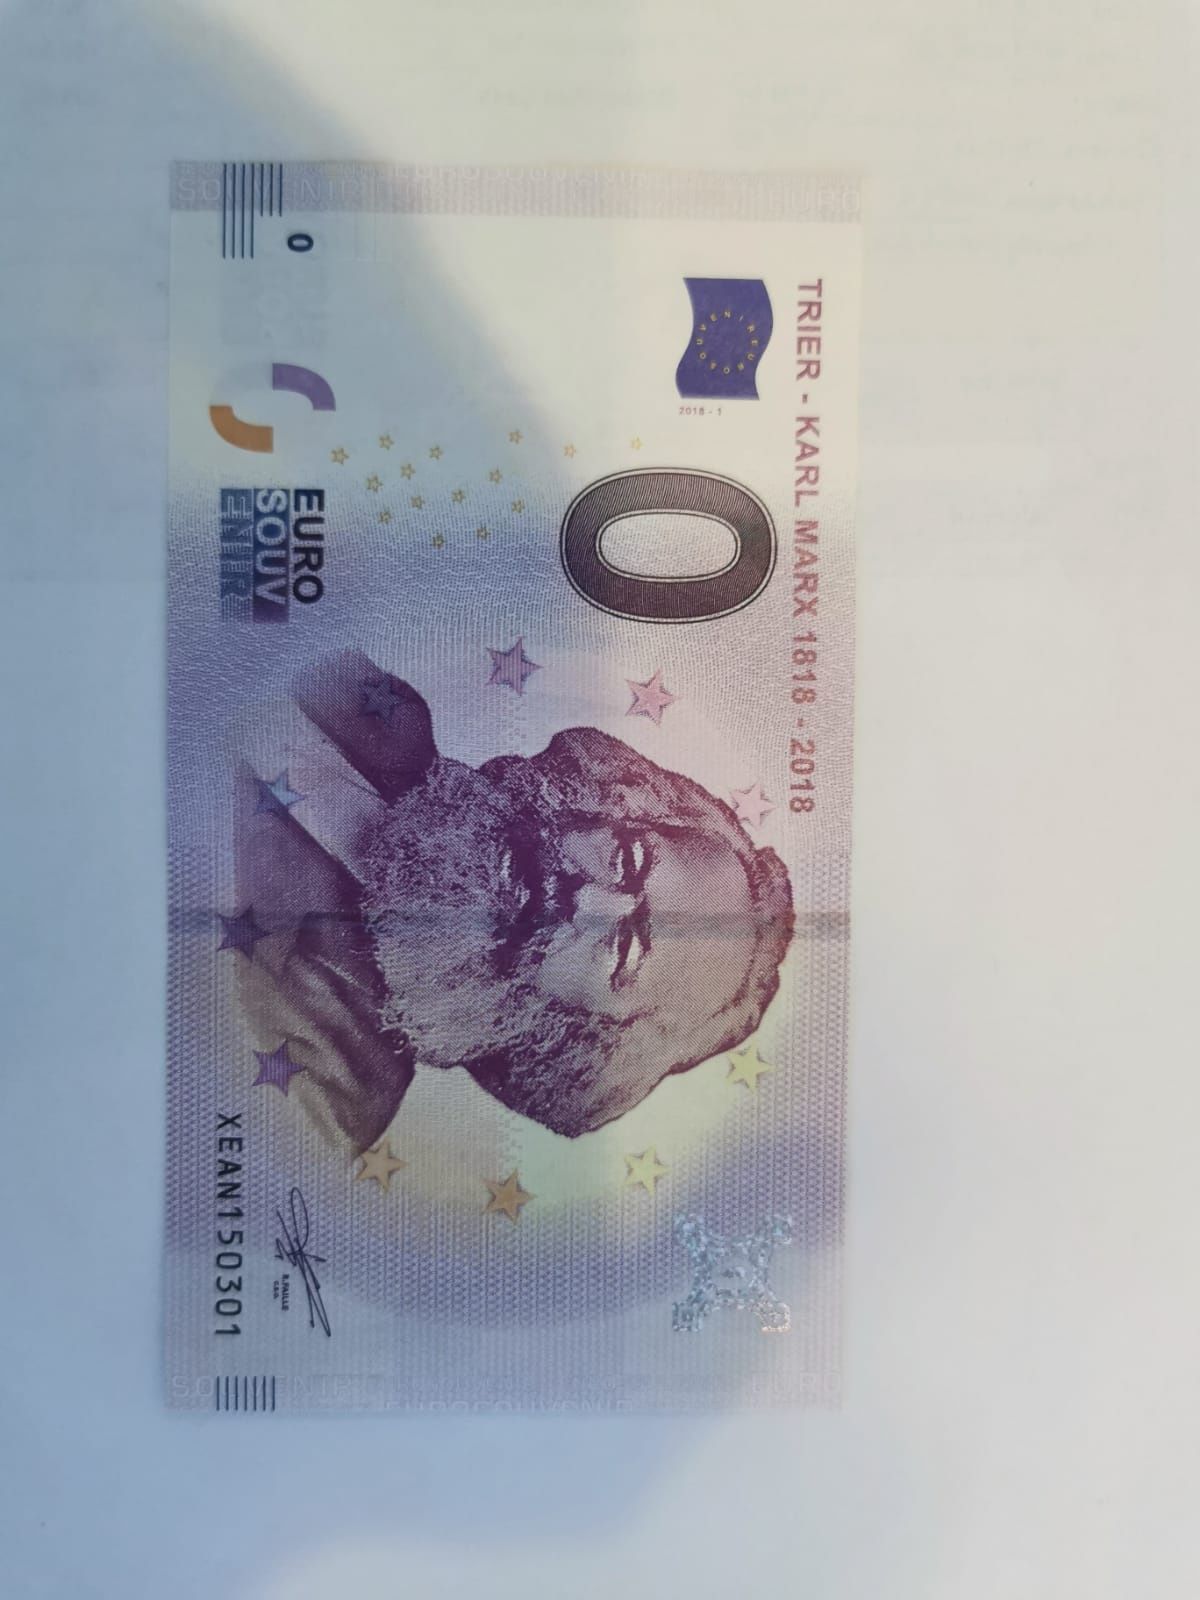 Vand bancnota suvenir cu chipul lui Karl Marx zero euro